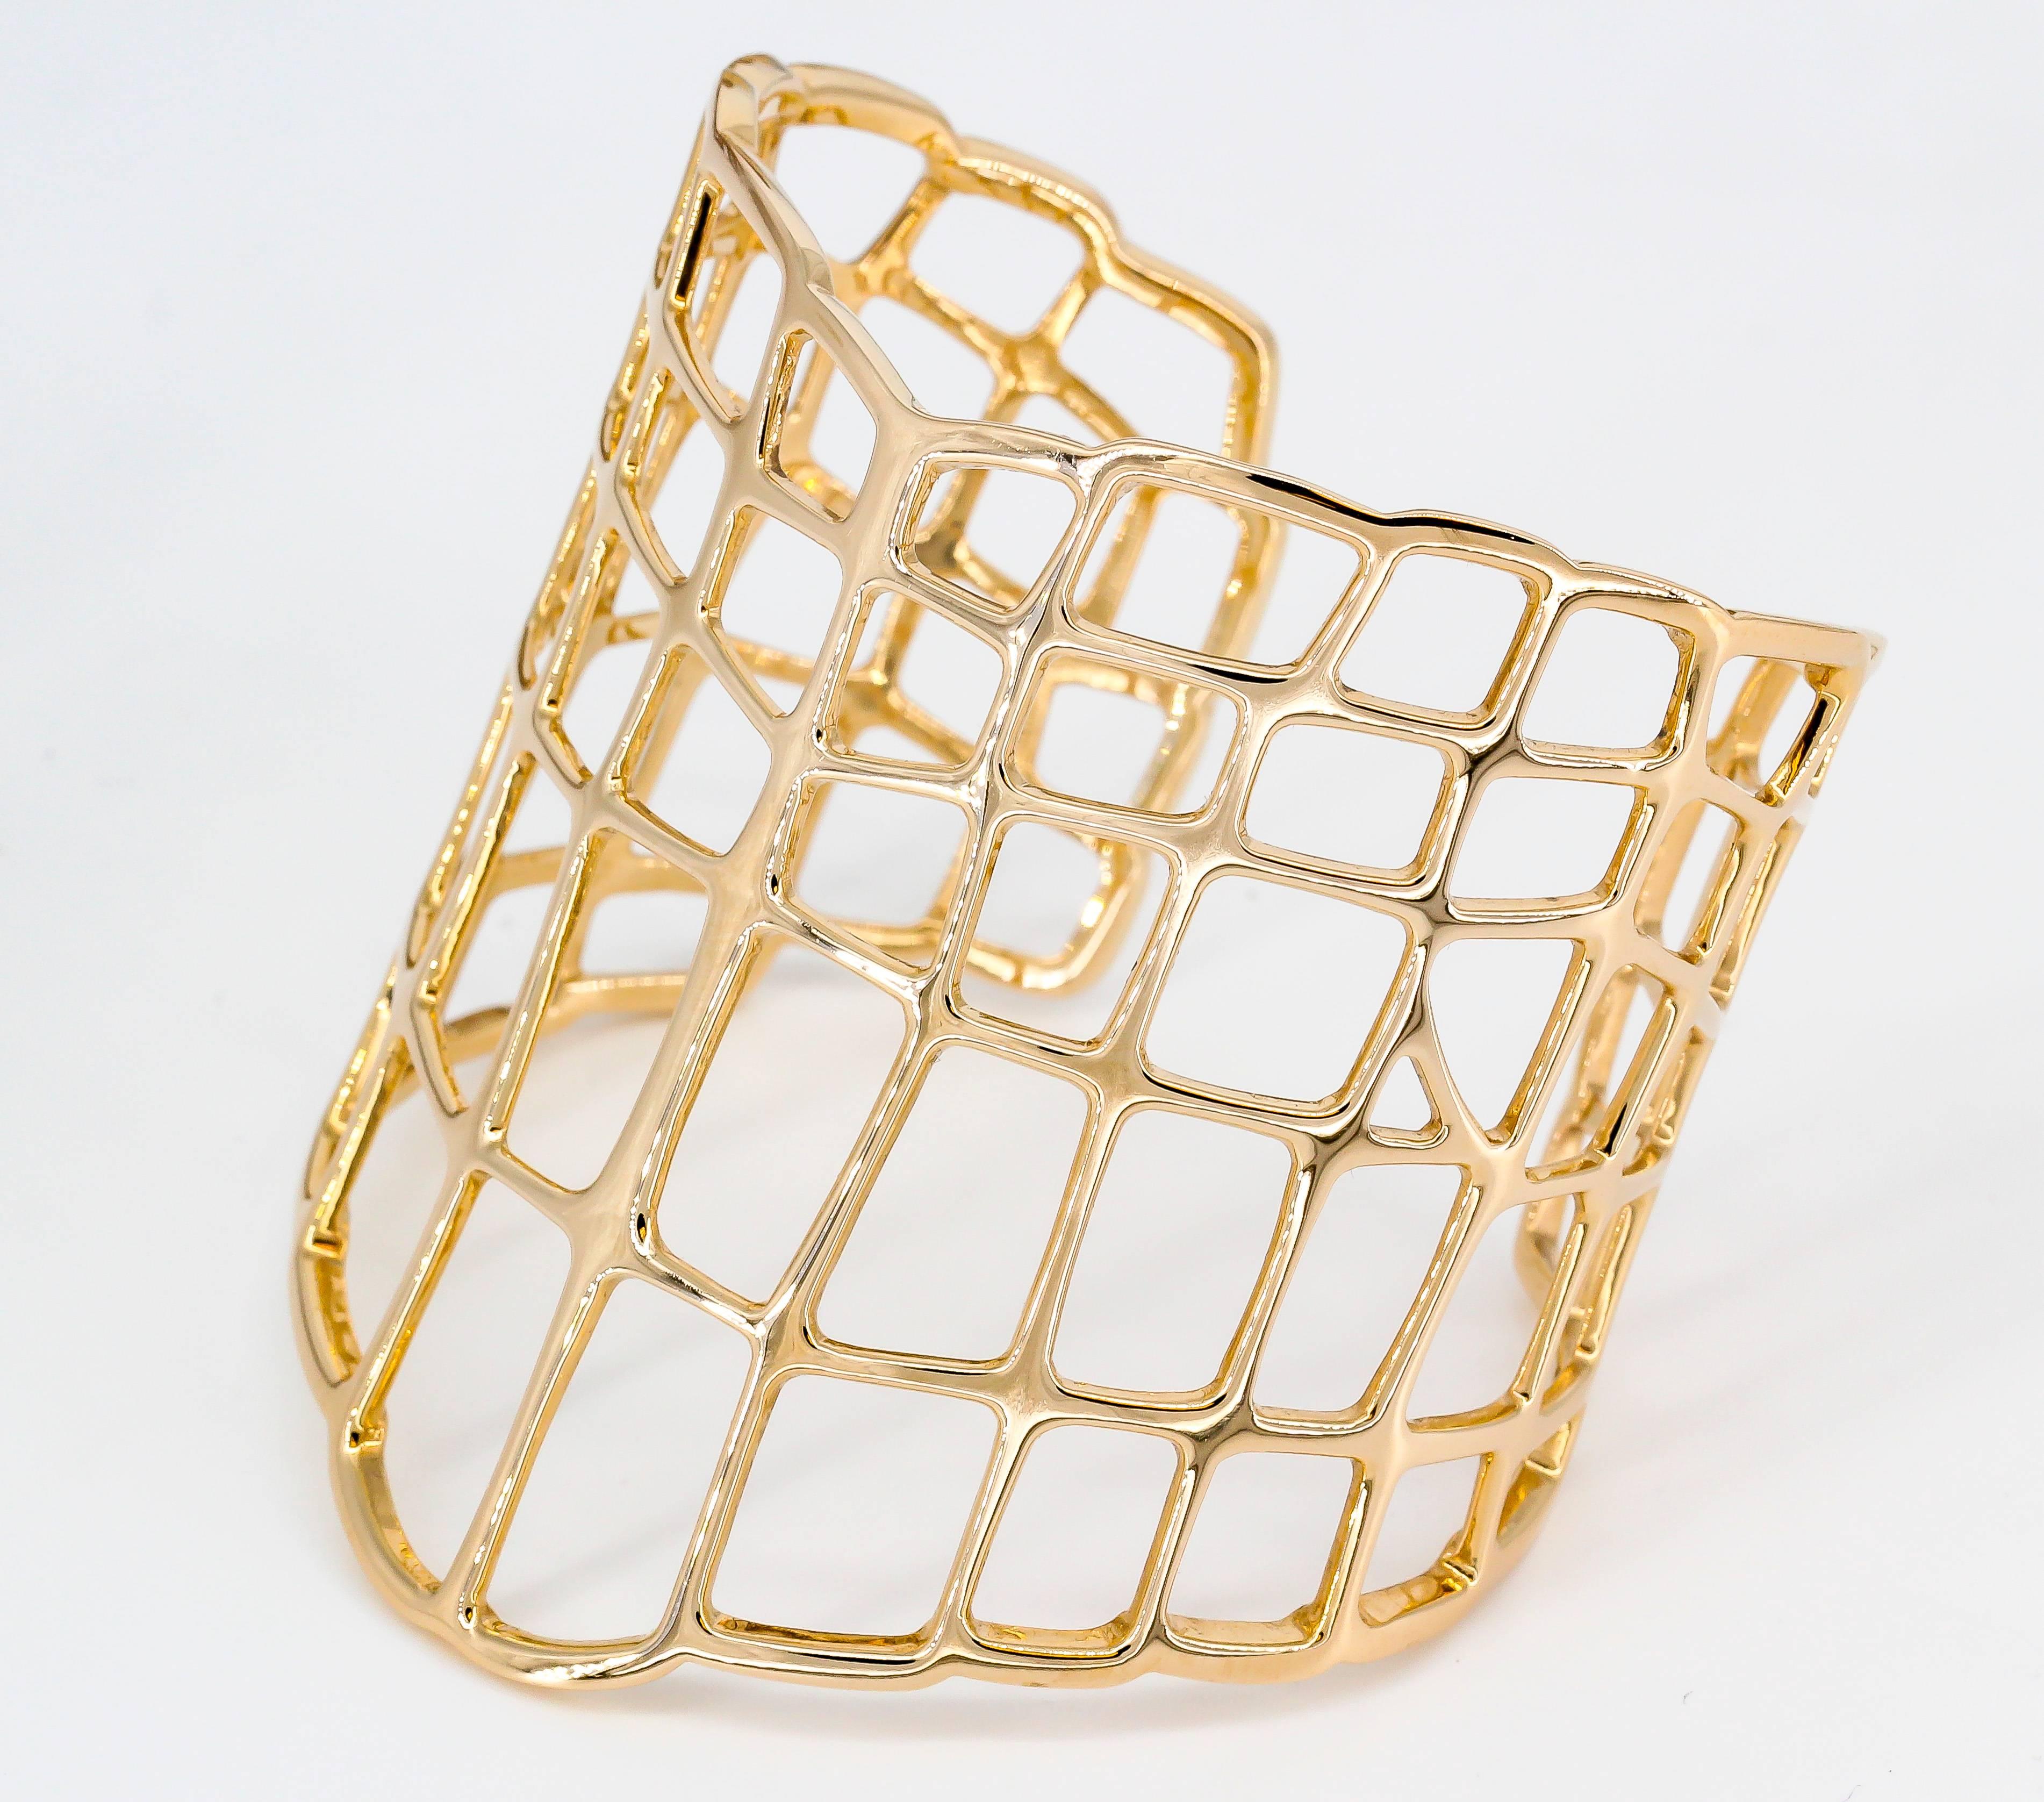 Elegant 18K rose gold cuff bracelet from the 